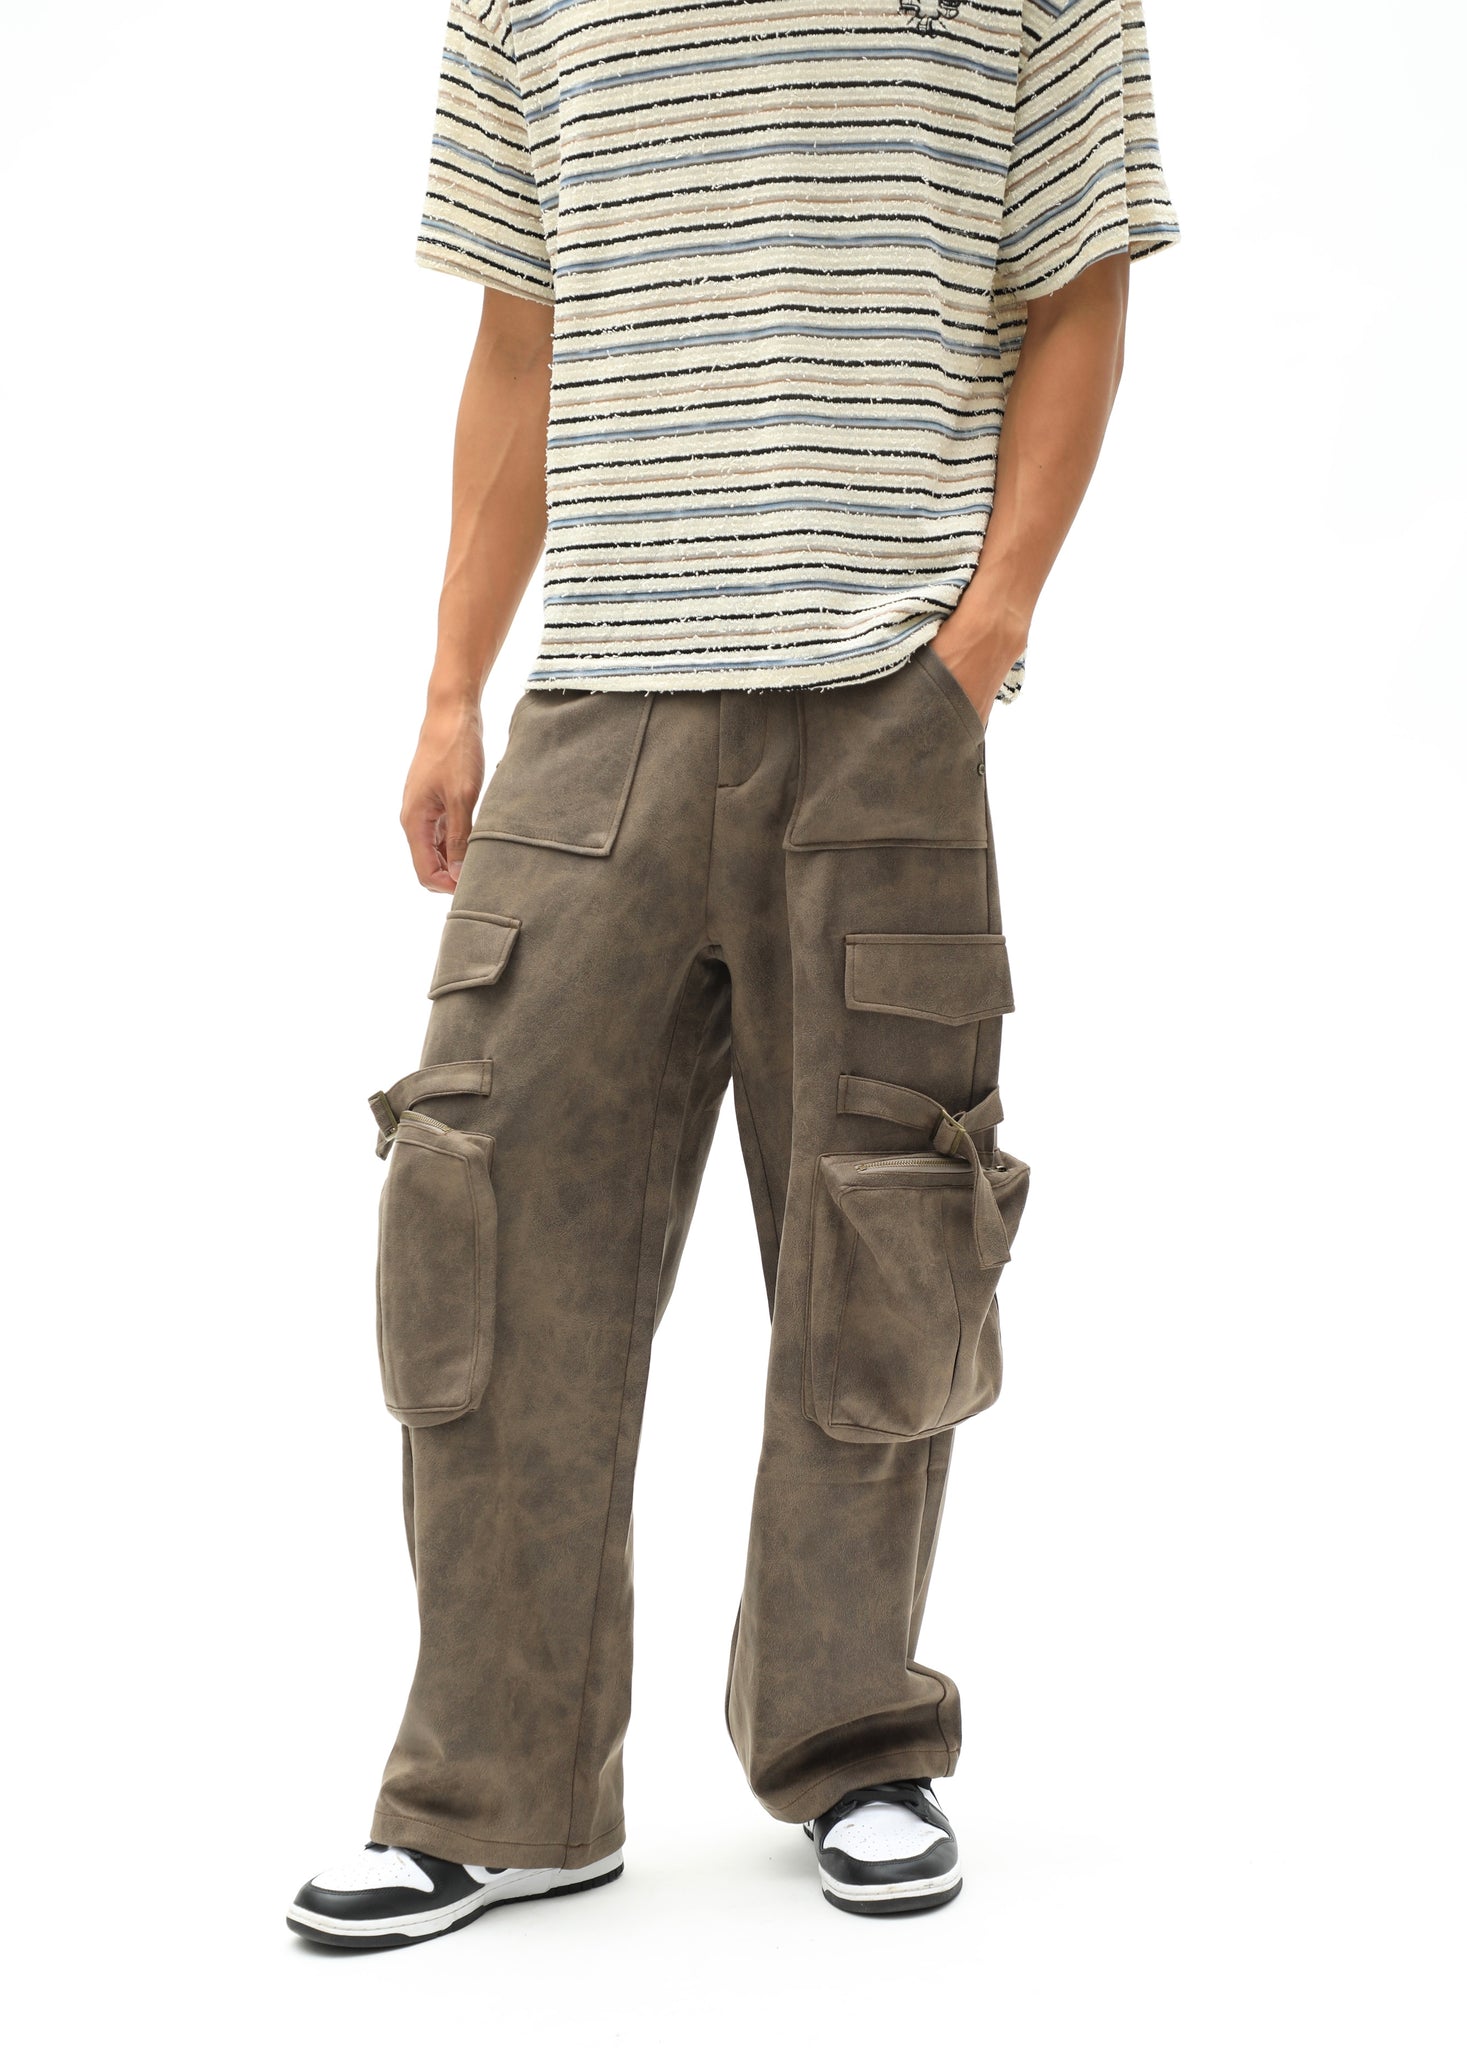 cllios Mens Cargo Pants Big and Tall Multi Pockets Pants Work Combat Pants  Summer Travel Cargo Pants - Walmart.com